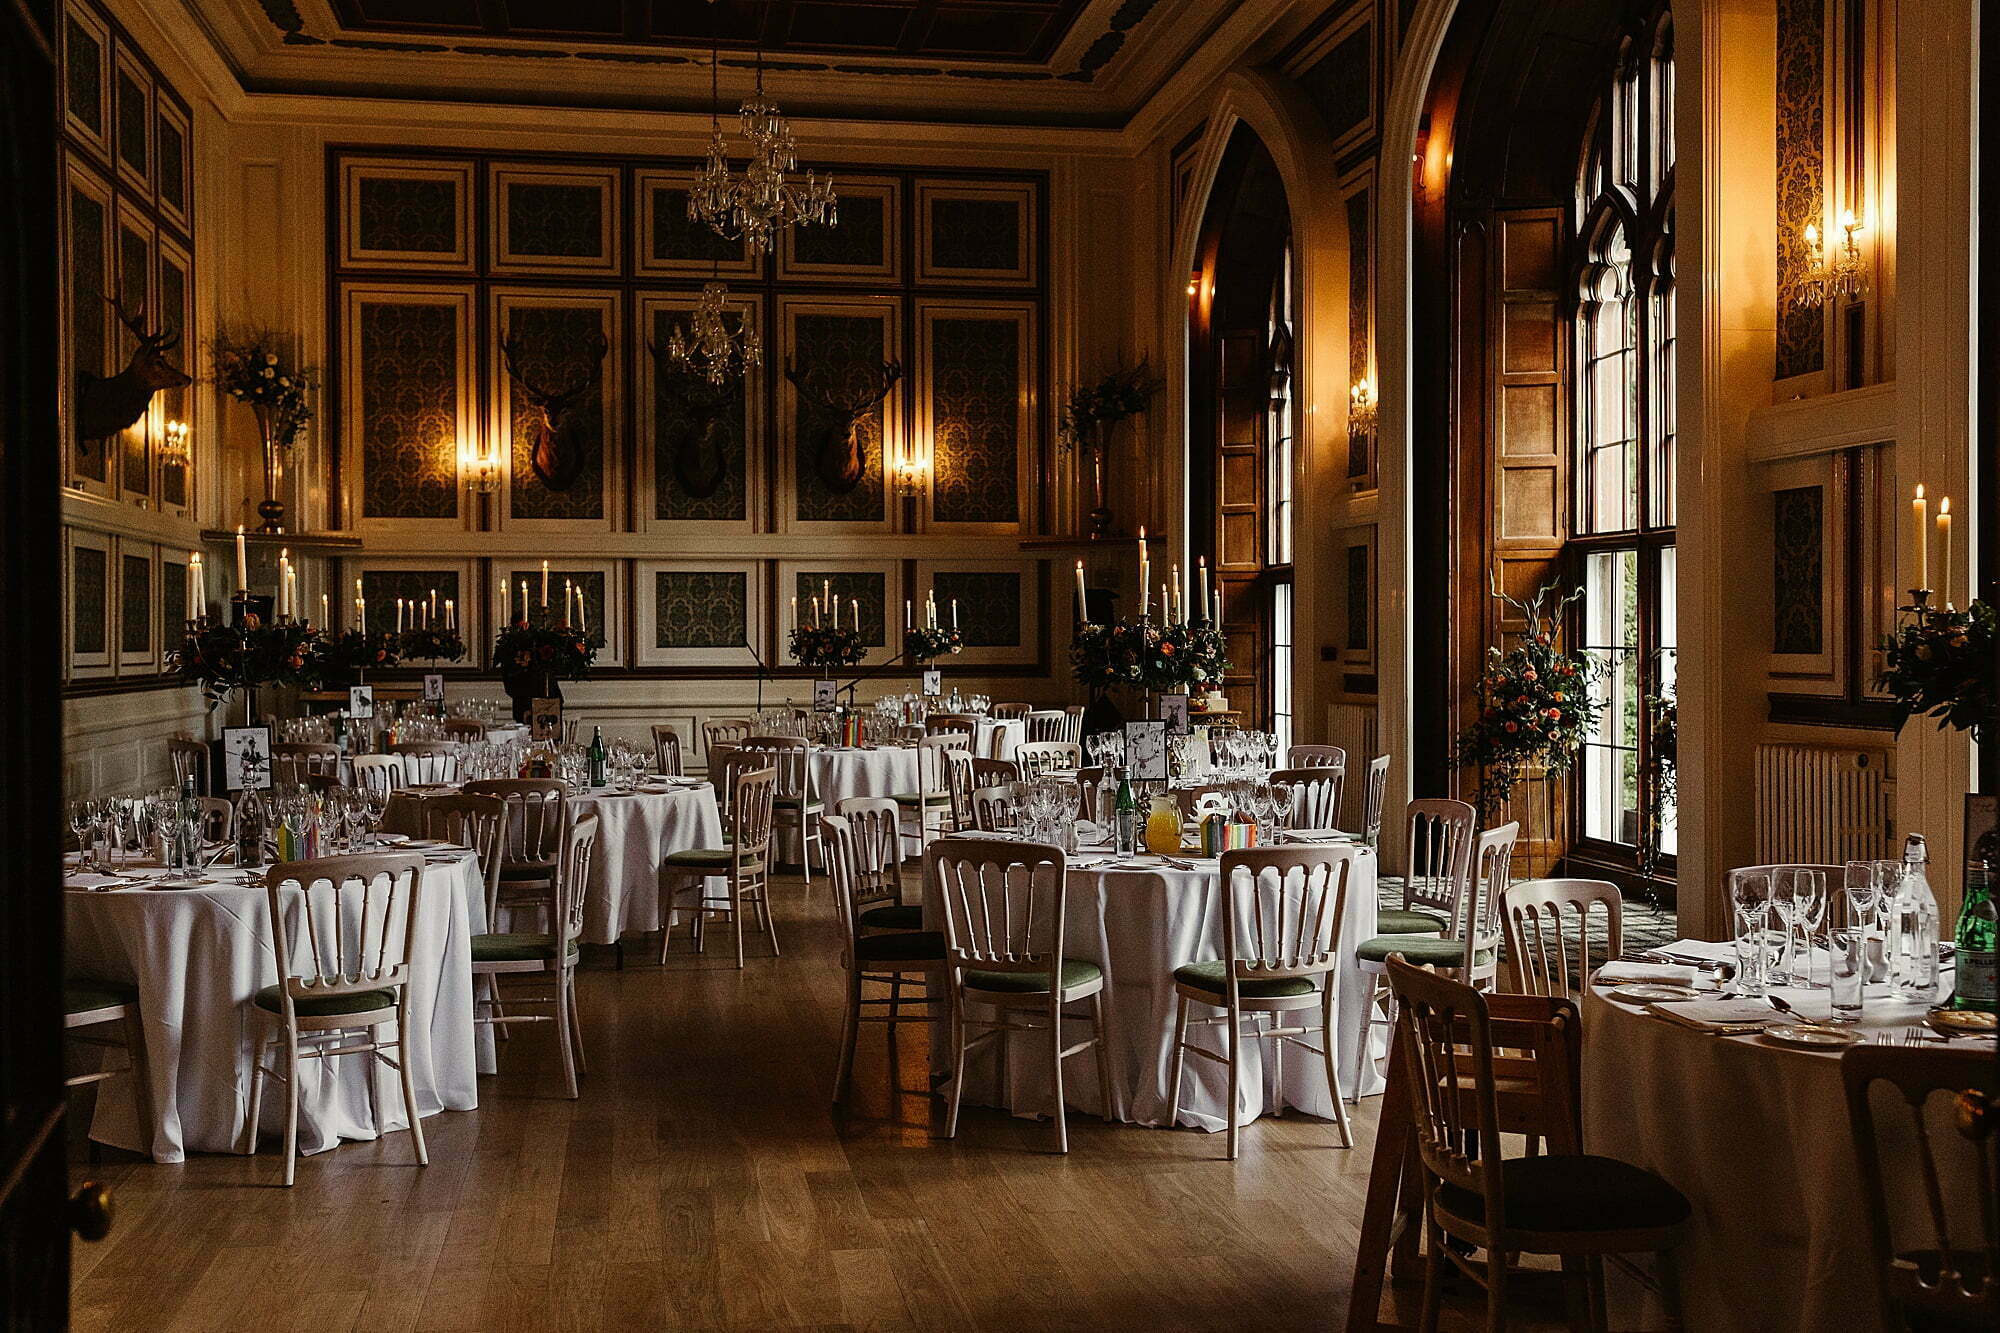 drumtochty castle main hall interior inside wedding dinner setup round tables